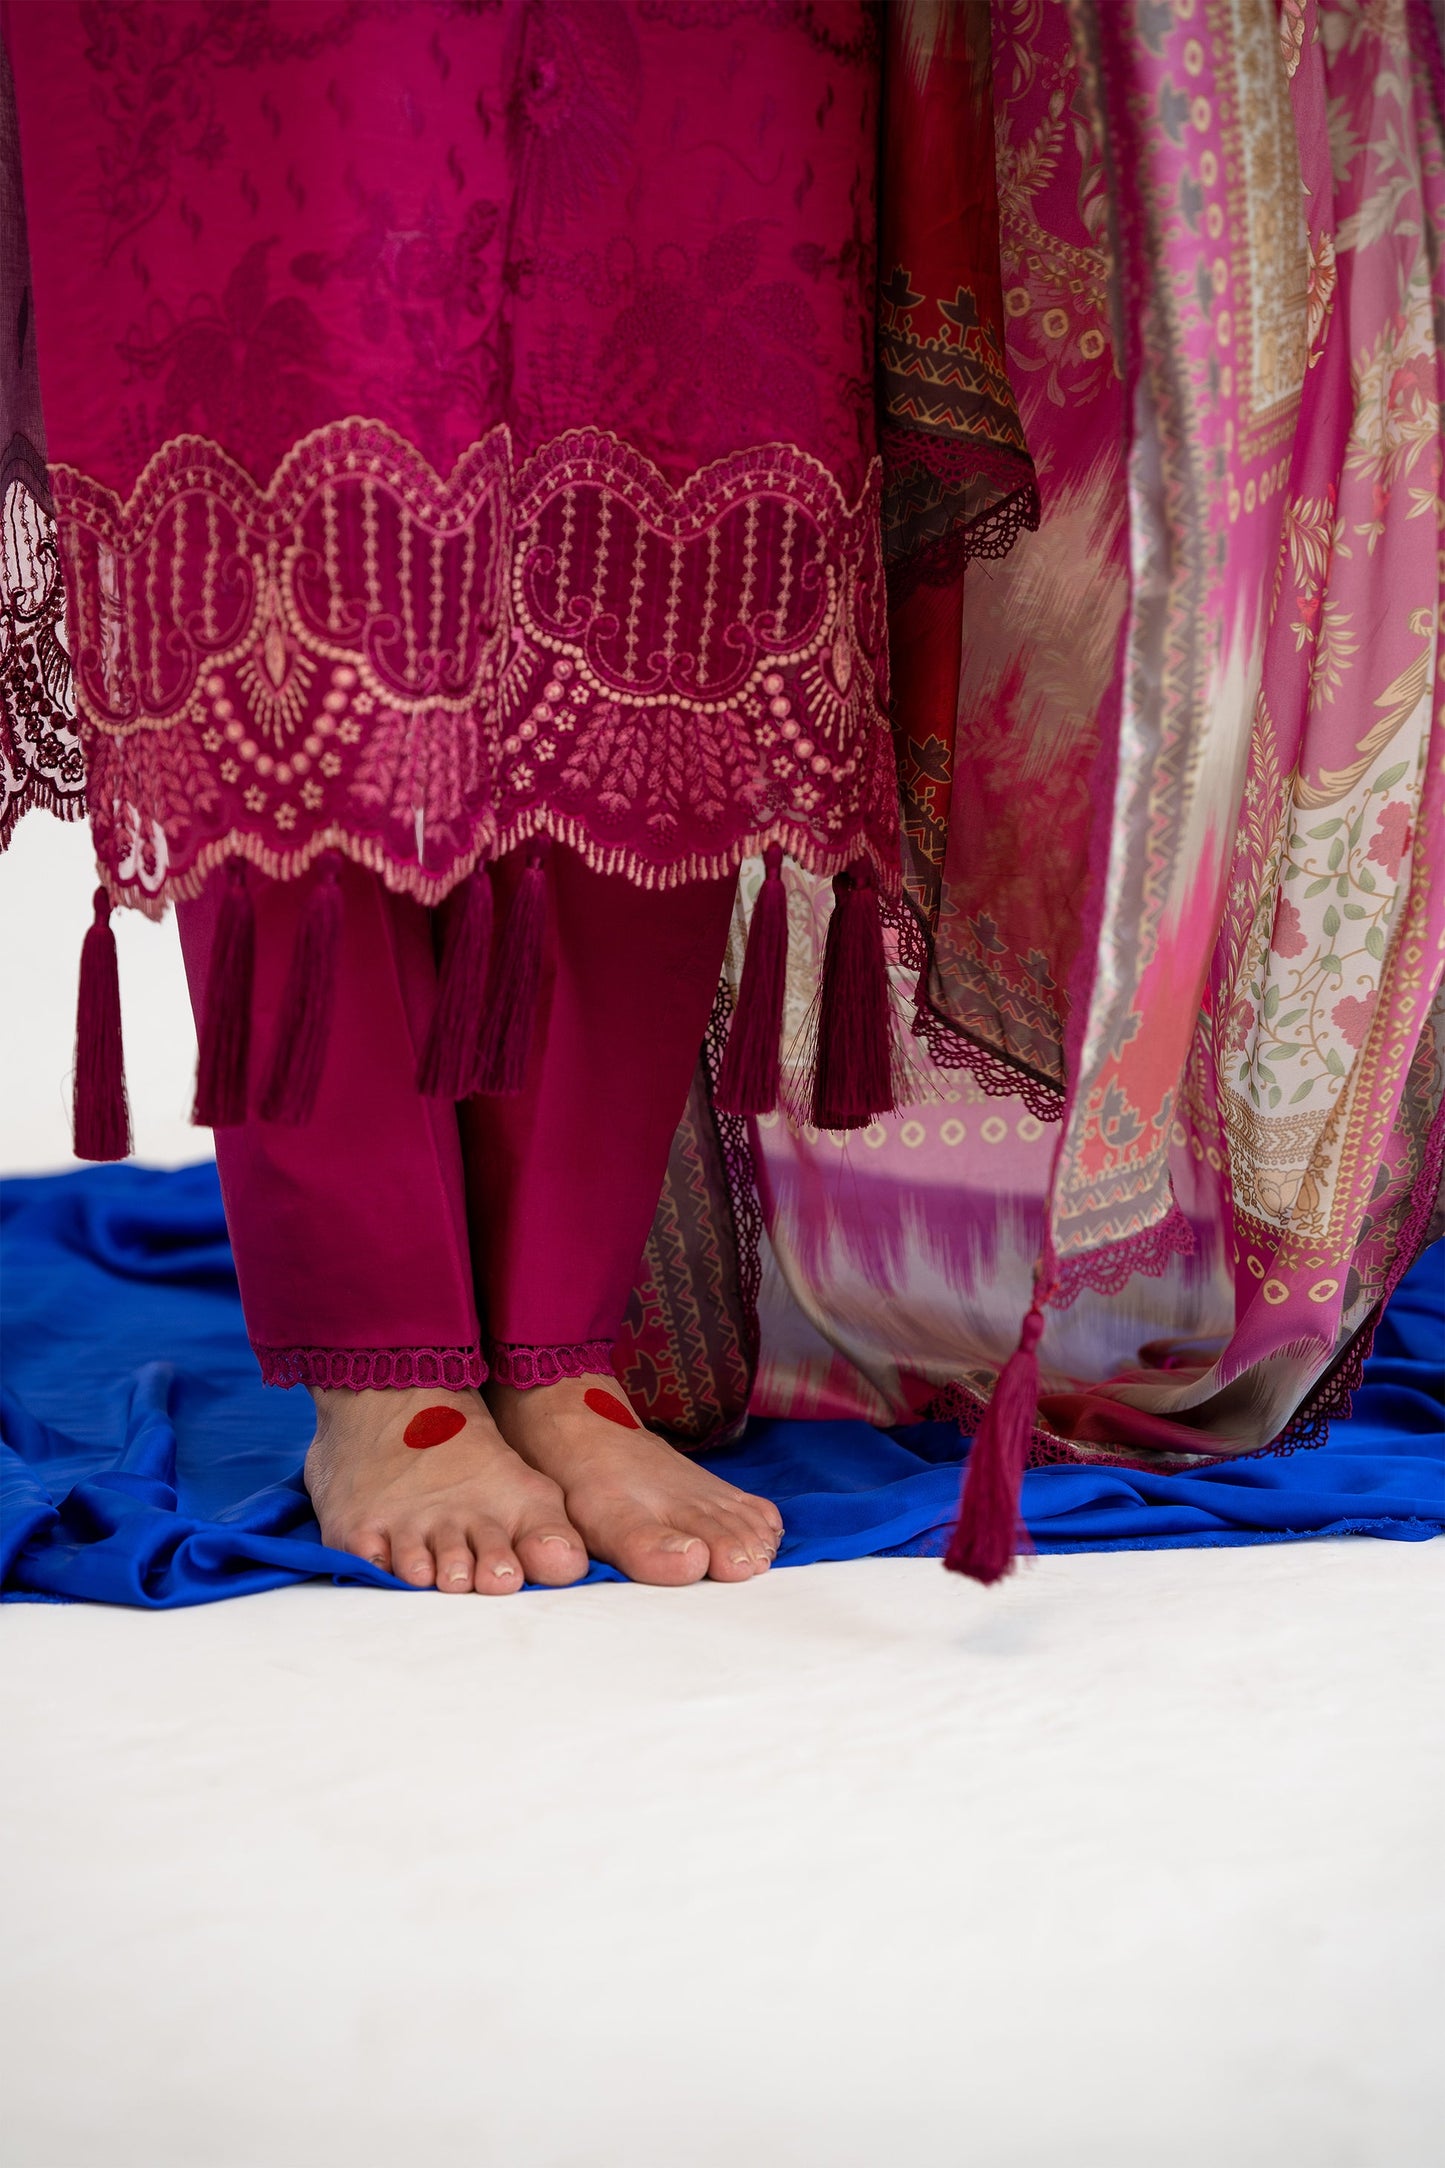 Shop Now - Noory - Saheliyan - Eid Edit 2023 - Gisele - Shahana Collection UK - Wedding and Bridal Party Dresses 